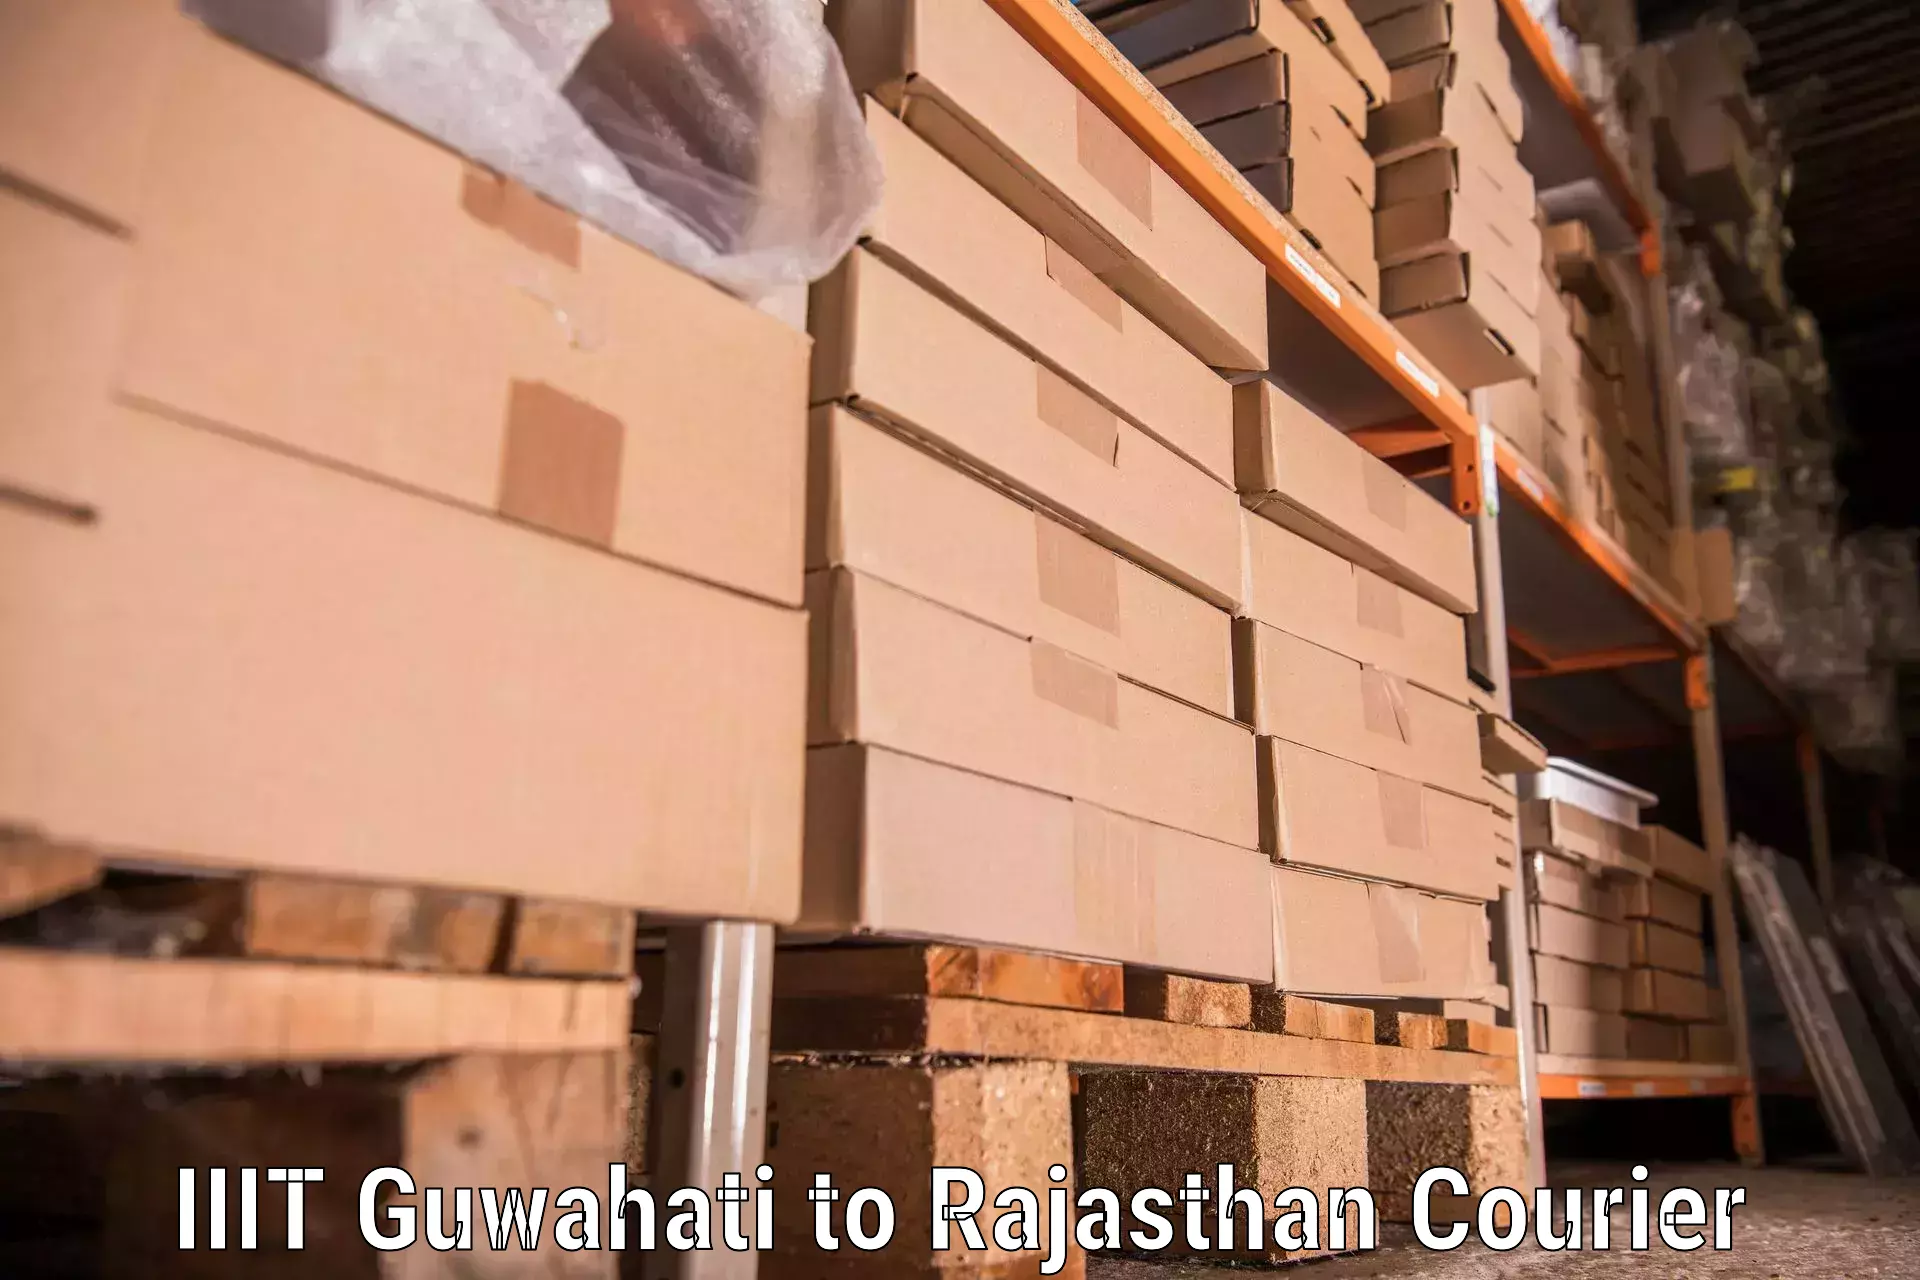 Quality moving company IIIT Guwahati to Sambhar